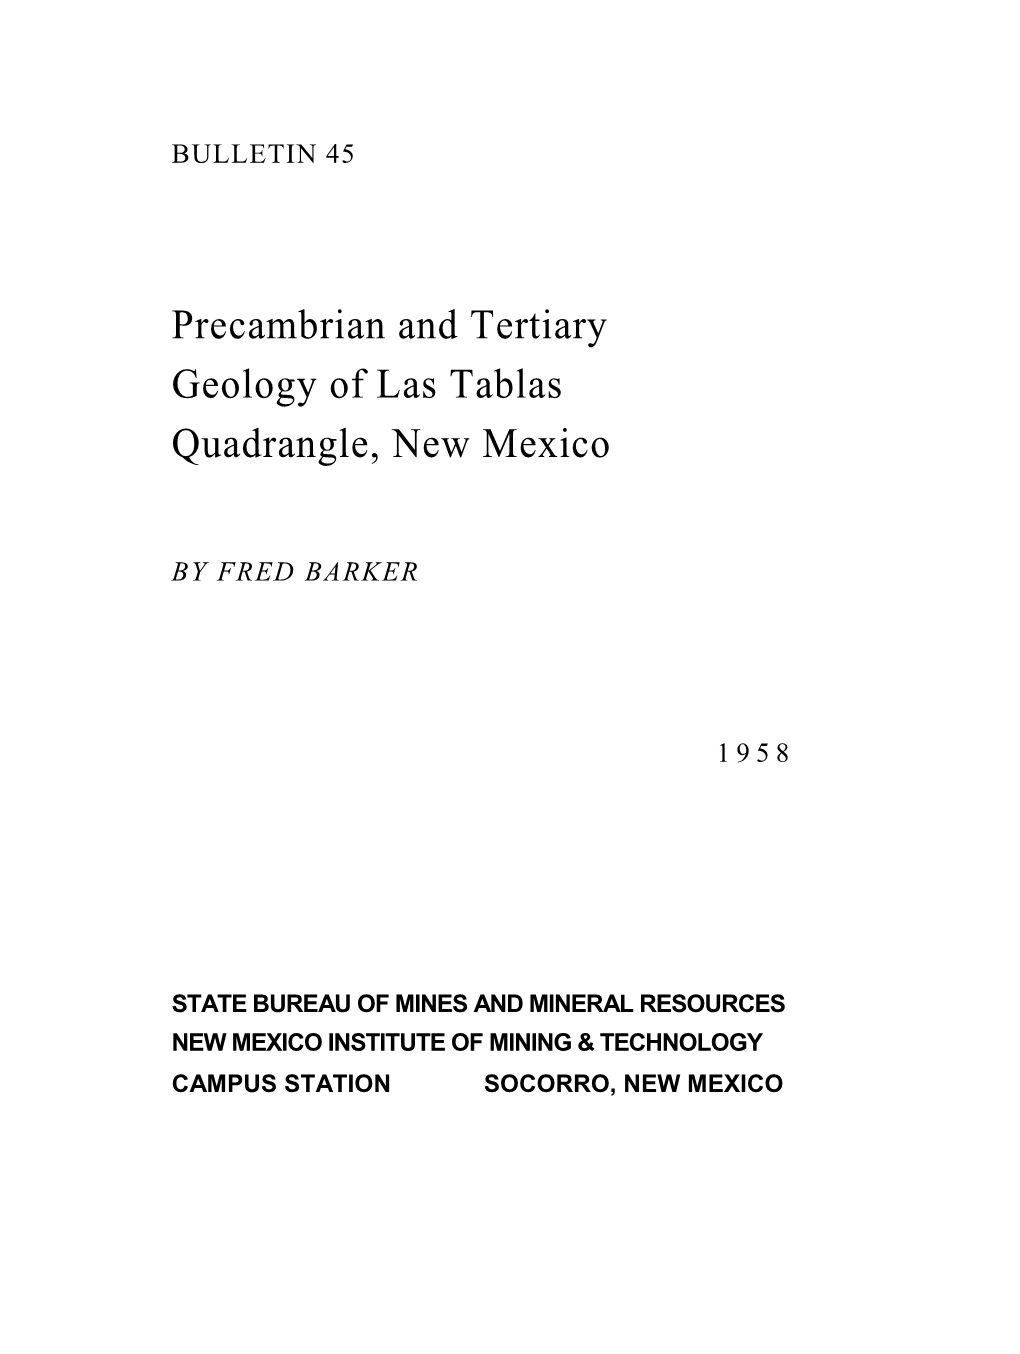 Precambrian and Tertiary Geology of Las Tablas Quadrangle, New Mexico